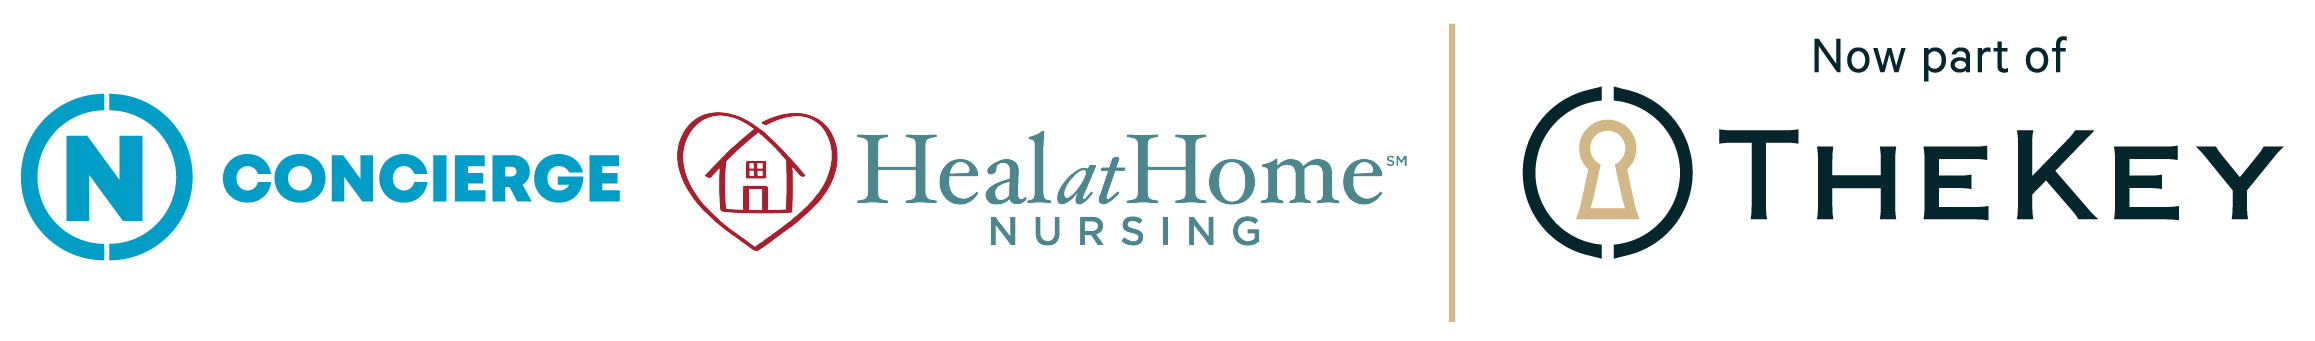 Heal-at-home-concierge-dual-logo.png